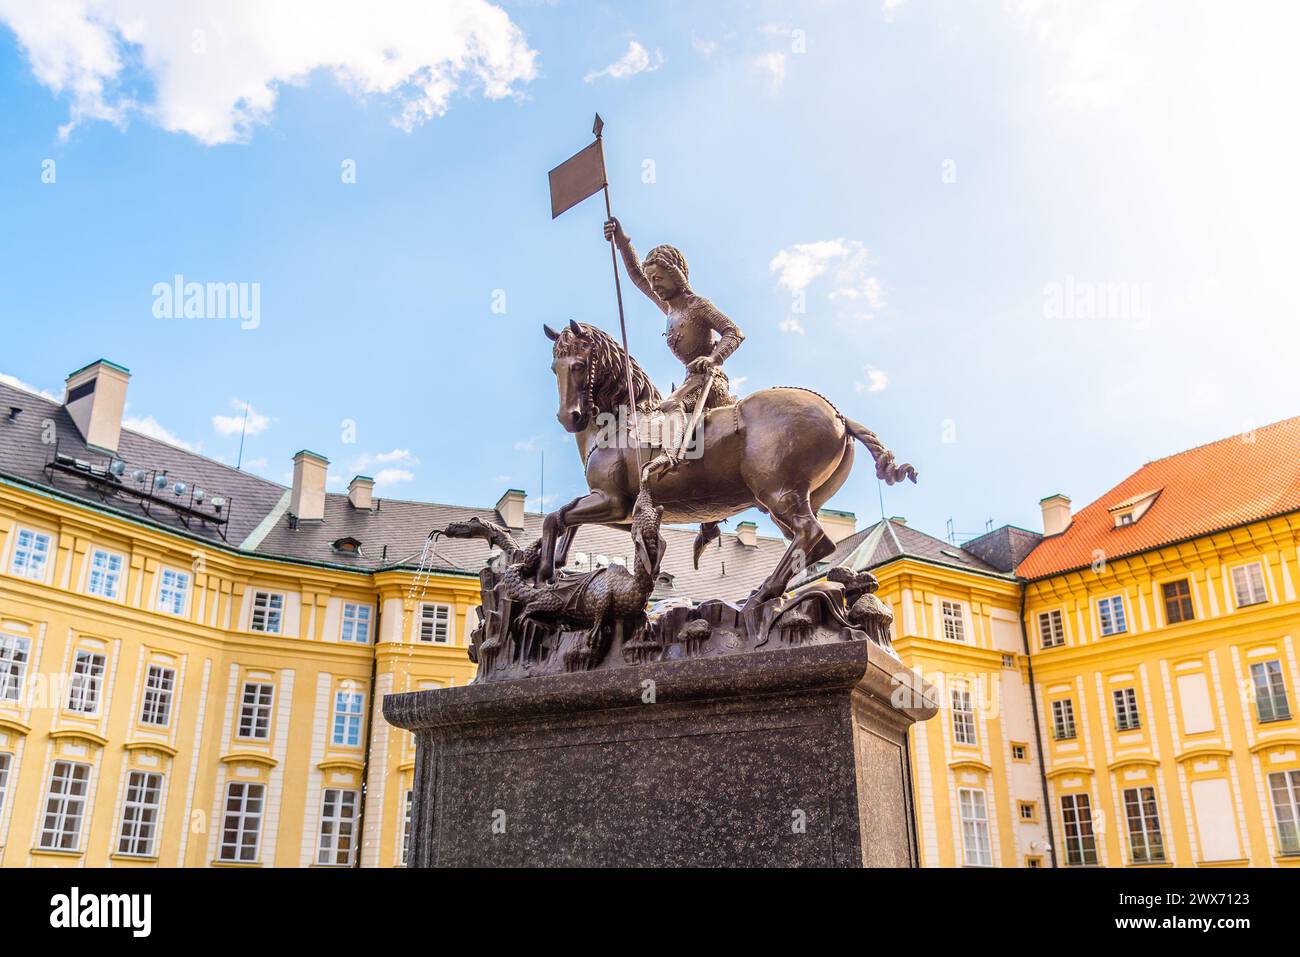 The bronze statue of Saint George triumphantly slays a dragon, set against the vibrant backdrop of Prague Castle under a blue sky. Prague, Czechia Stock Photo